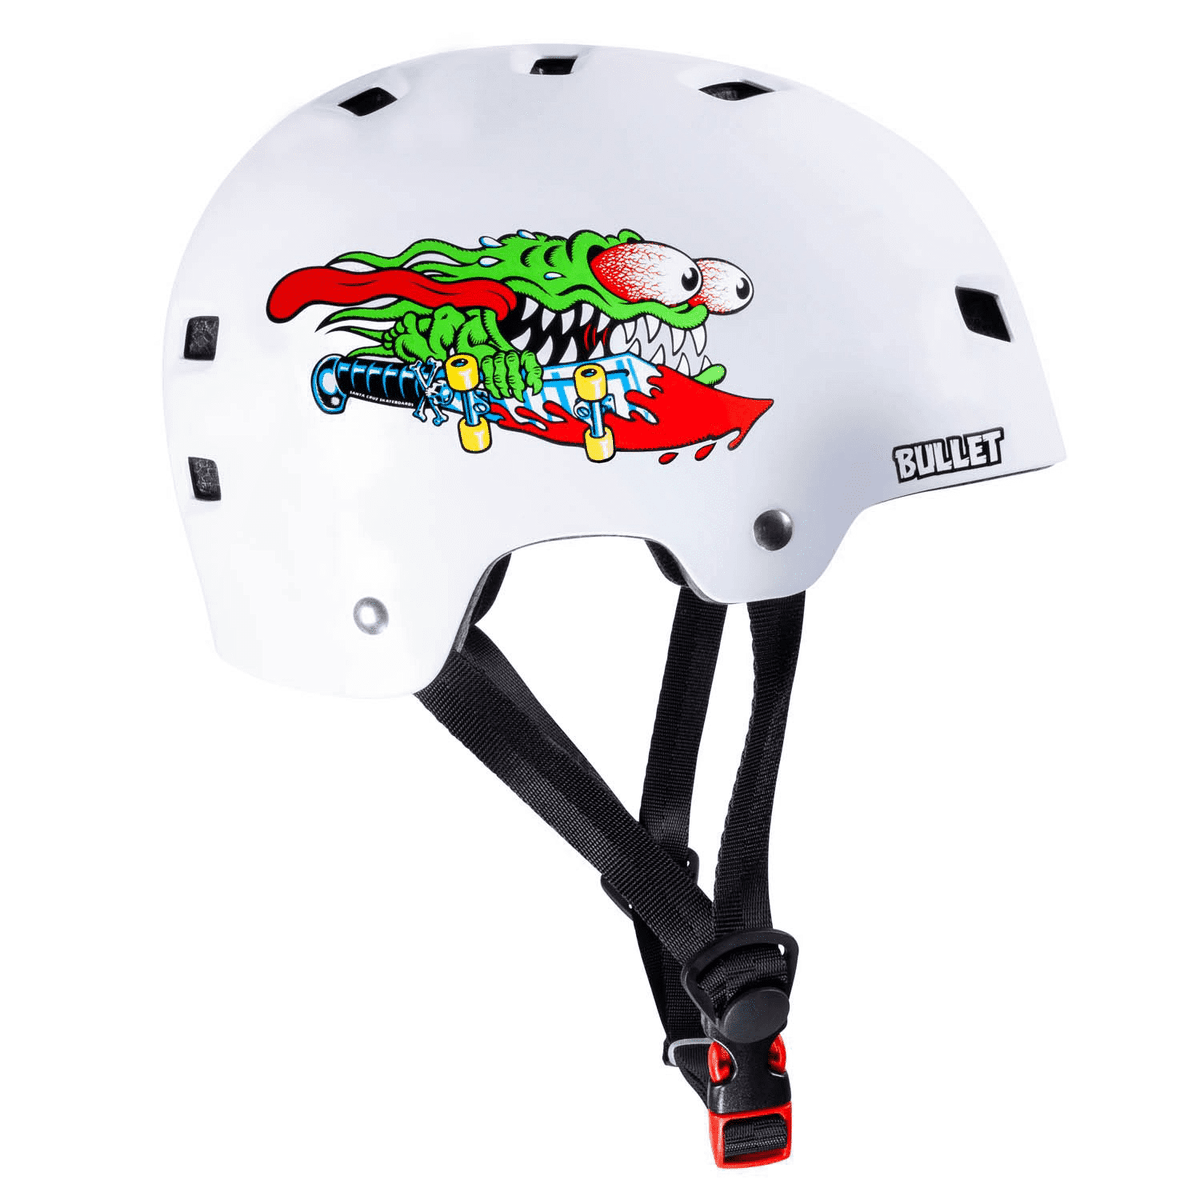 Bullet X Santa Cruz Helmet Slasher